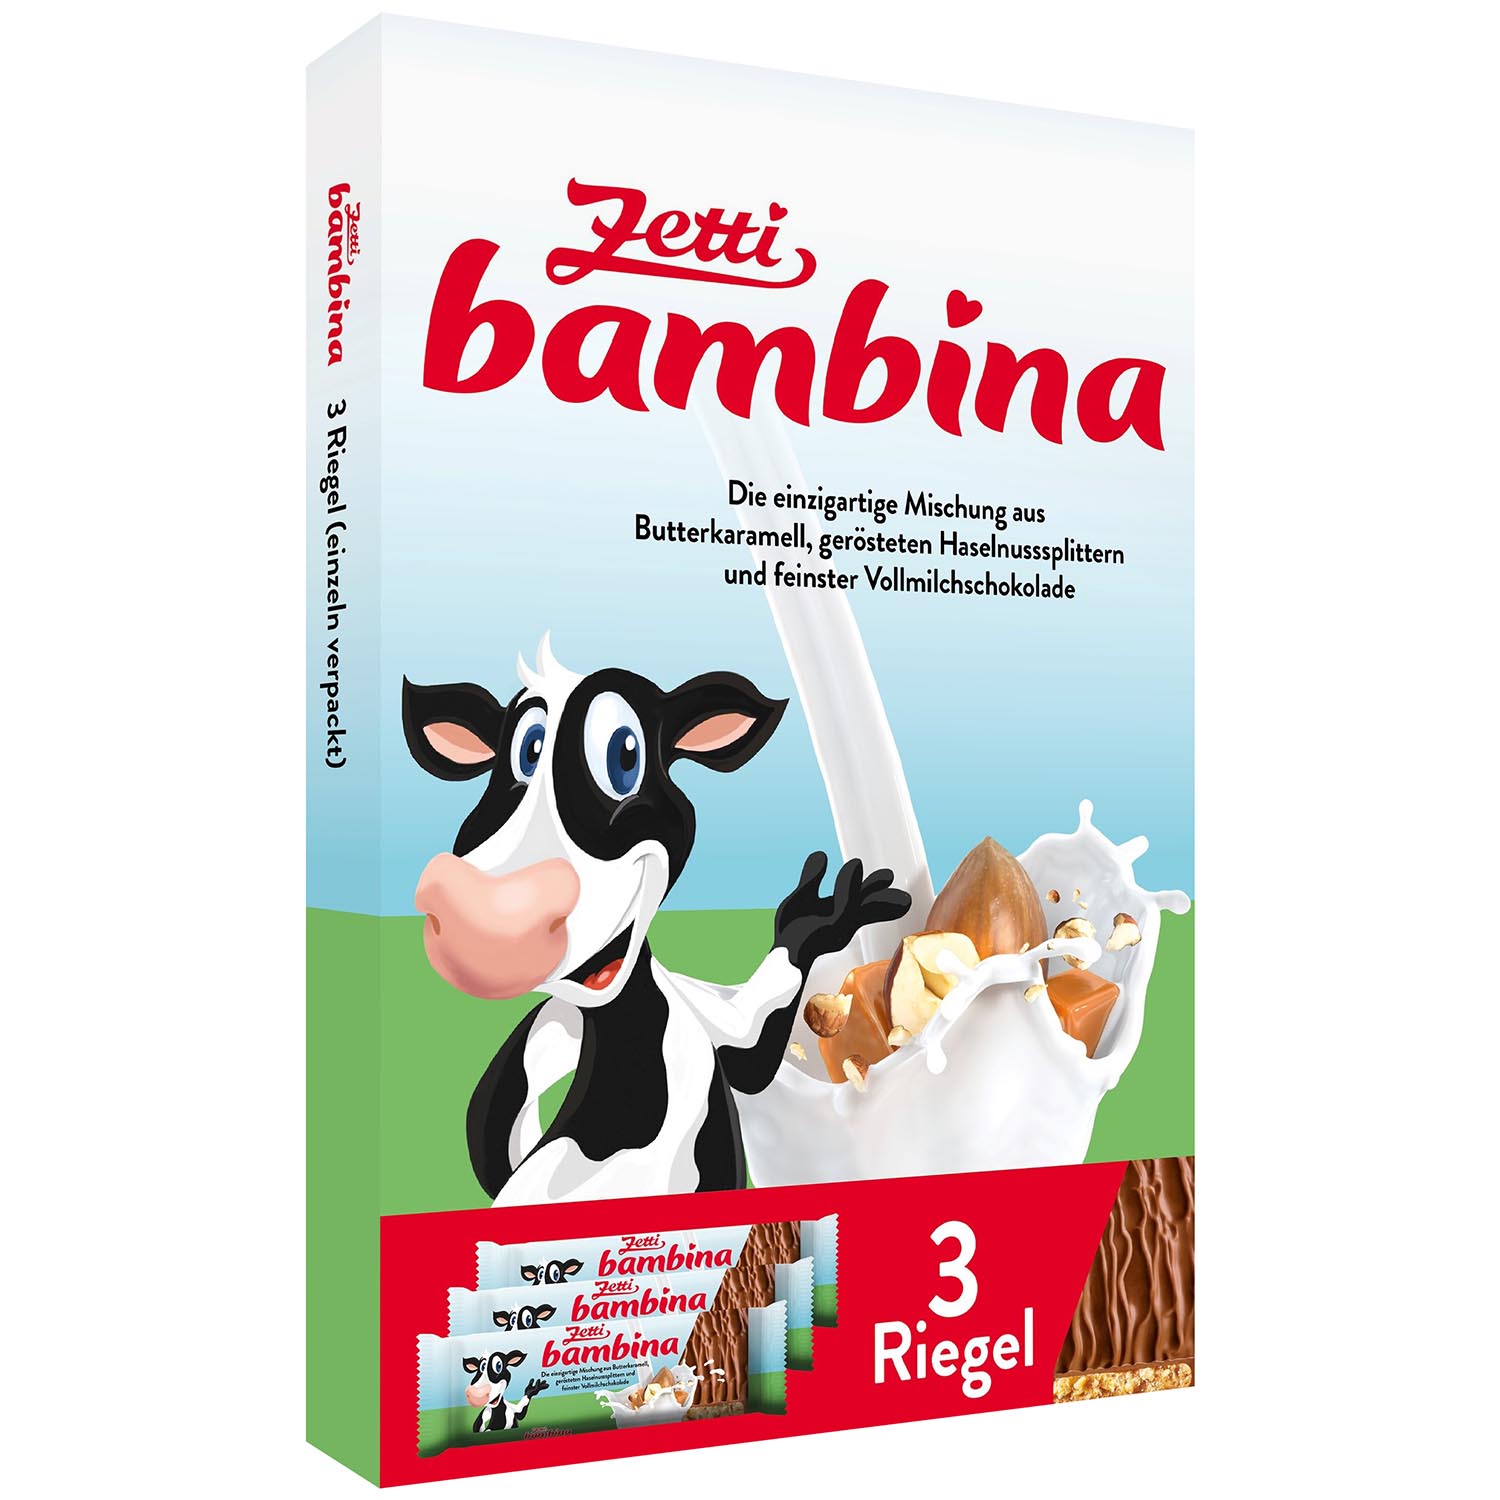 Riegel Zetti Bambina 3 leckere Sorten DDR Produkte Geschenkkarte 